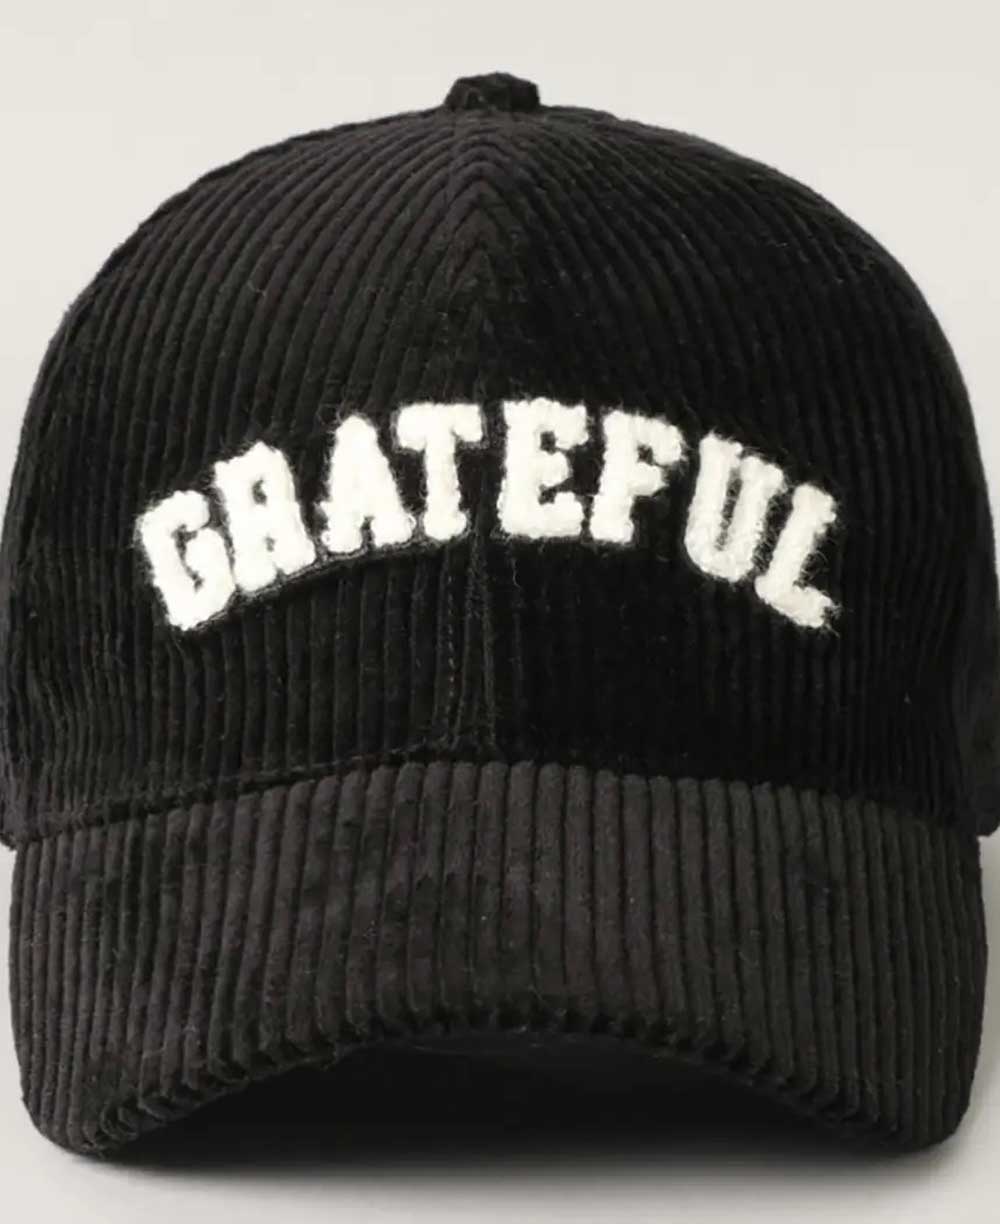 Grateful Embroidered Baseball Cap - Cap Black